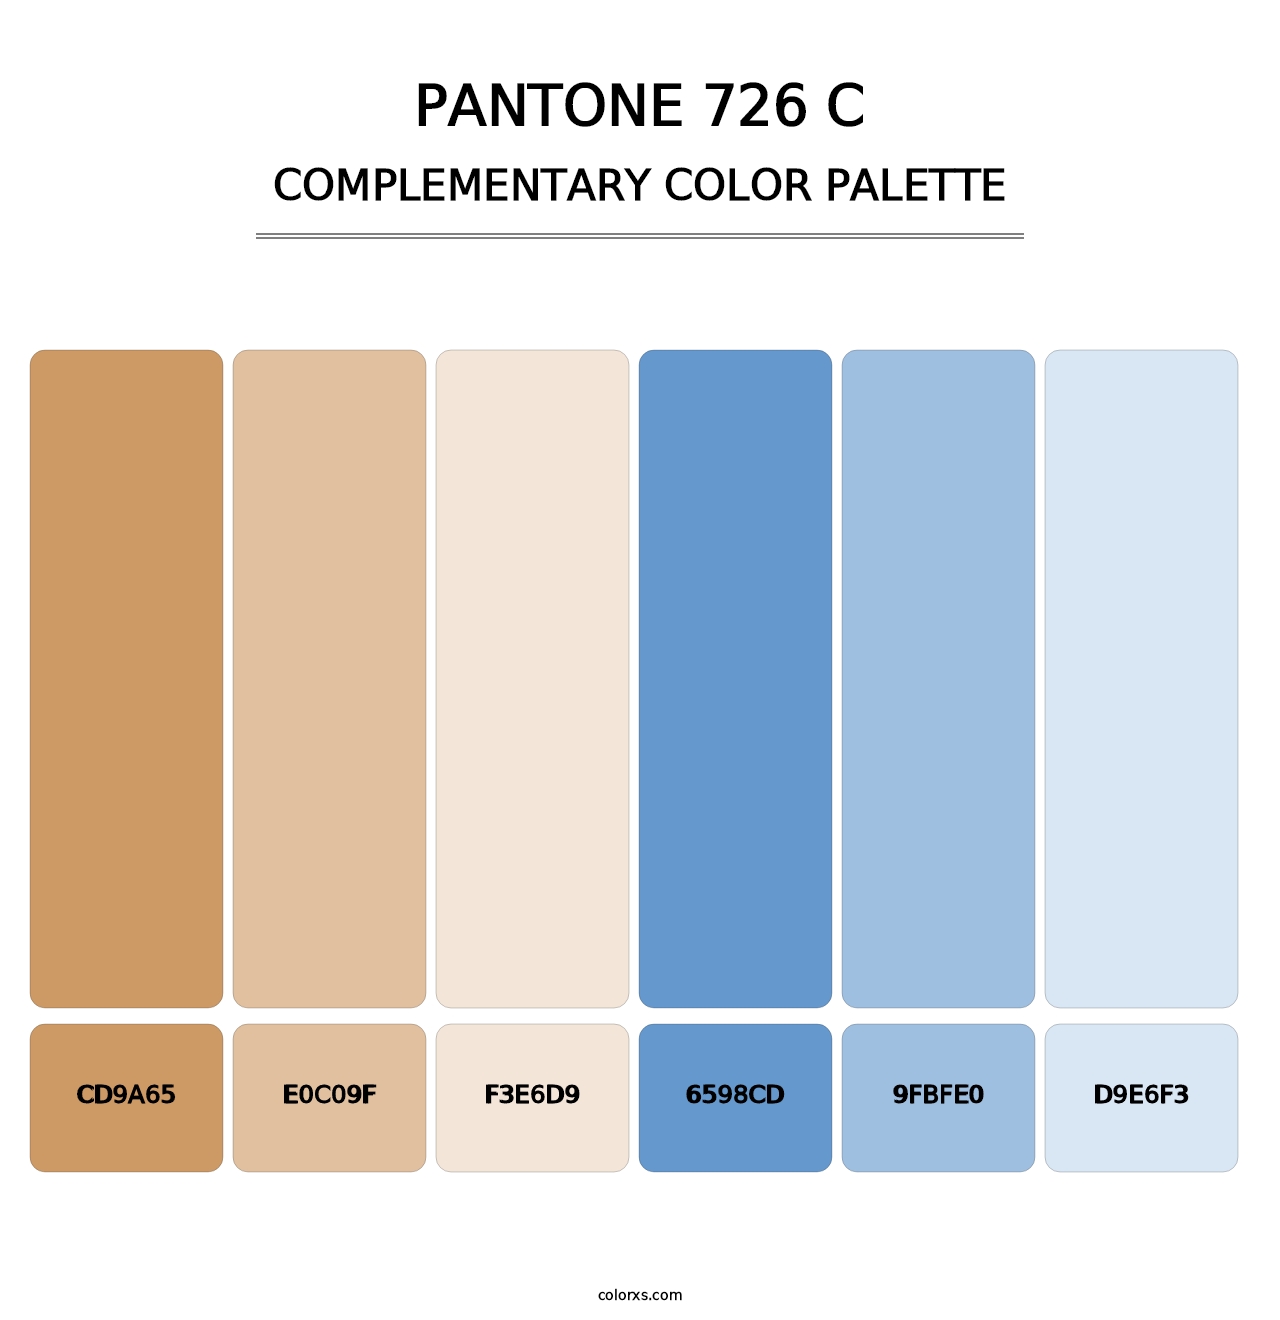 PANTONE 726 C - Complementary Color Palette